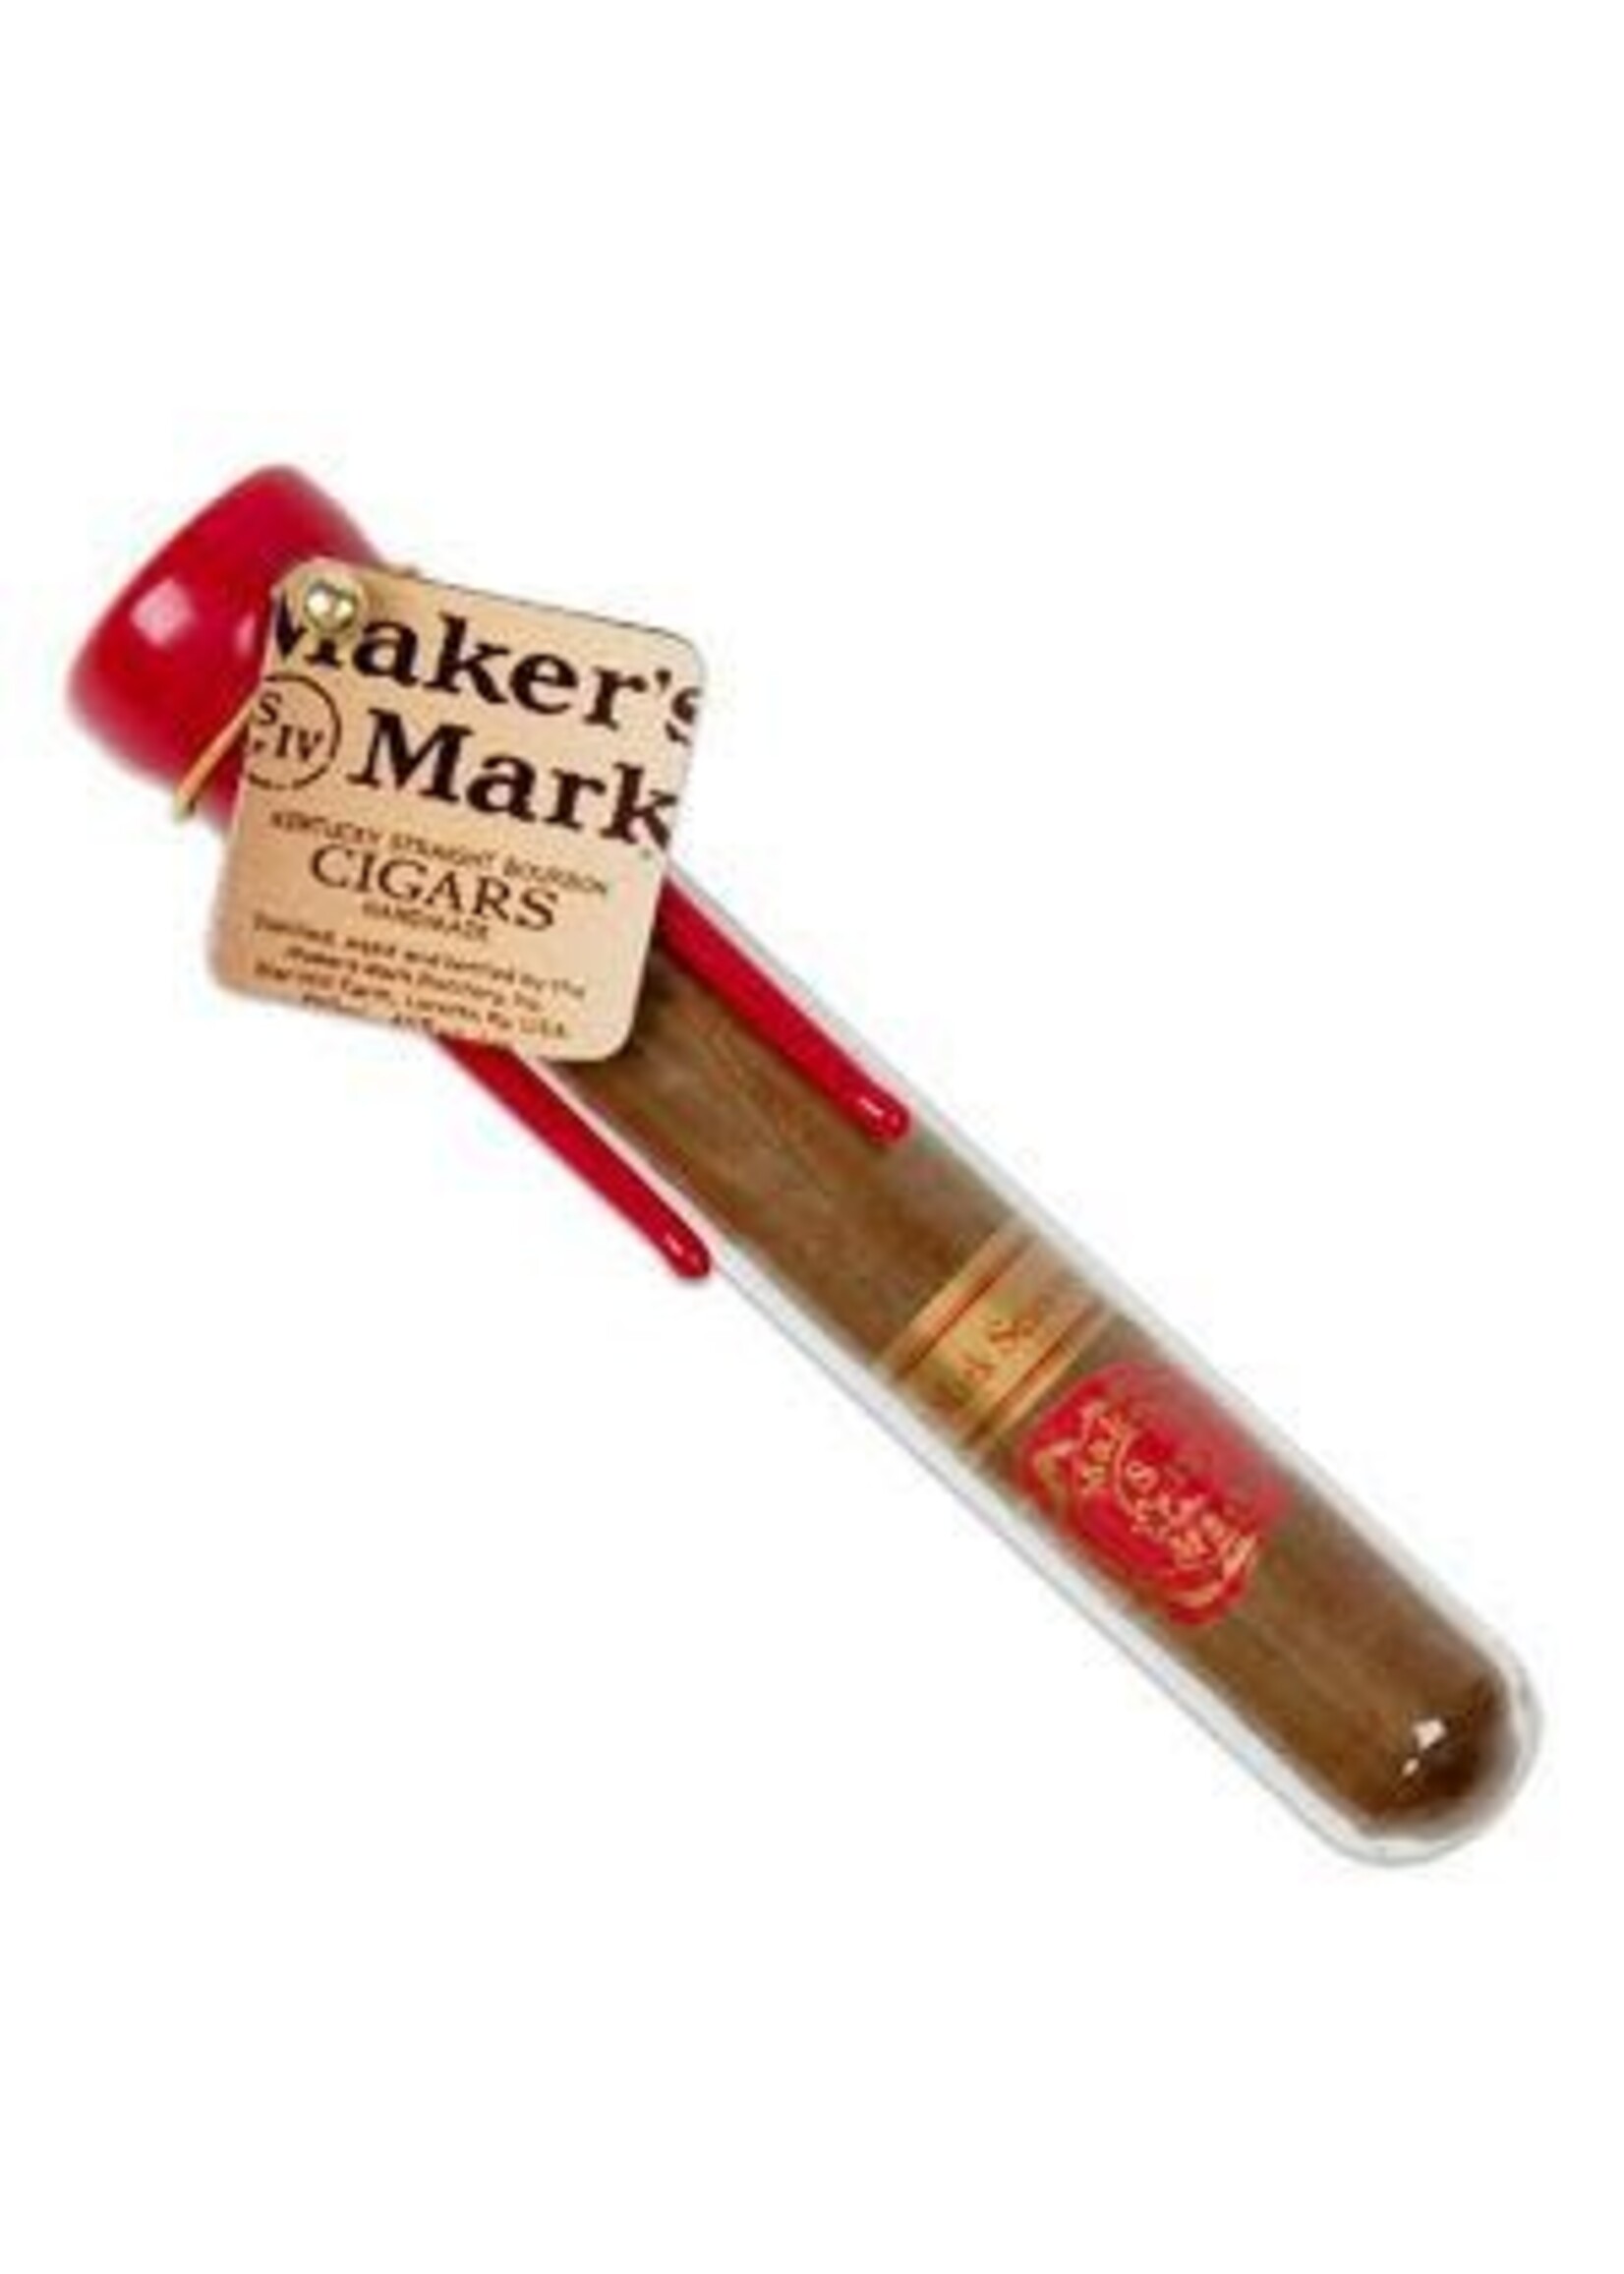 The Bourbon Cigar Seasoned With Maker’s Mark (25/Box)